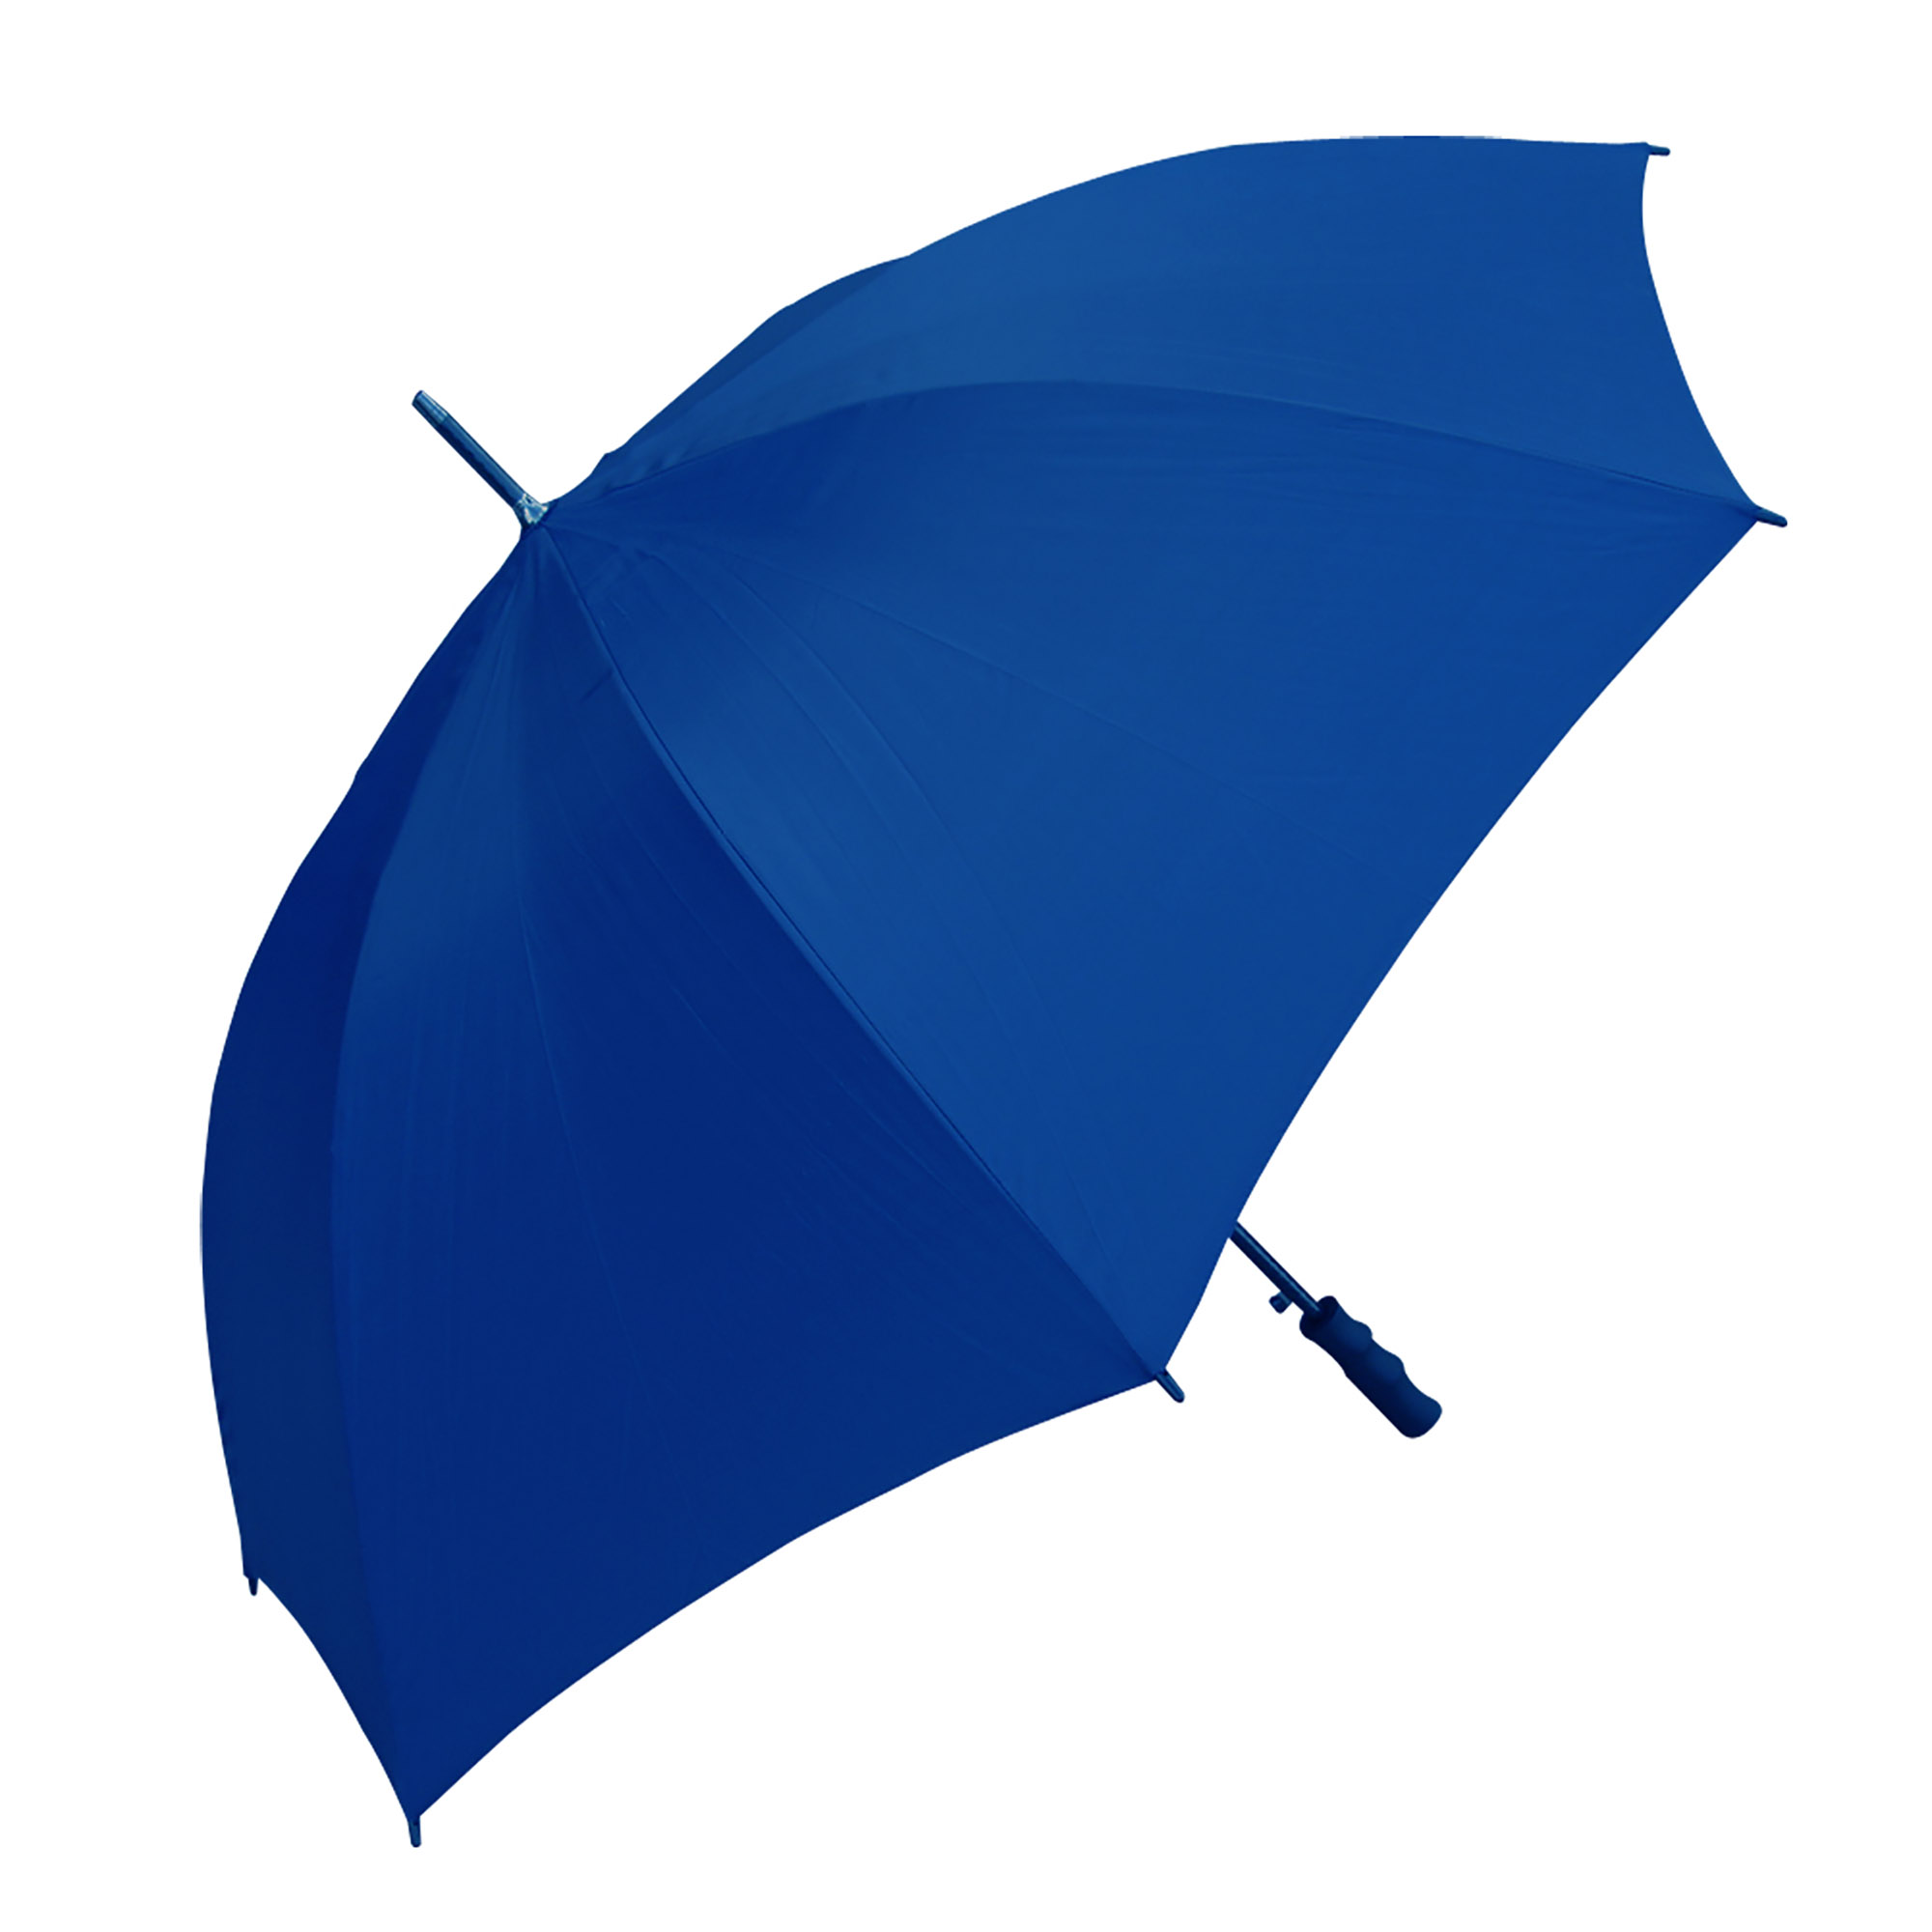 Bulk Promotional Dark Blue Sands Umbrella Online In Perth Australia